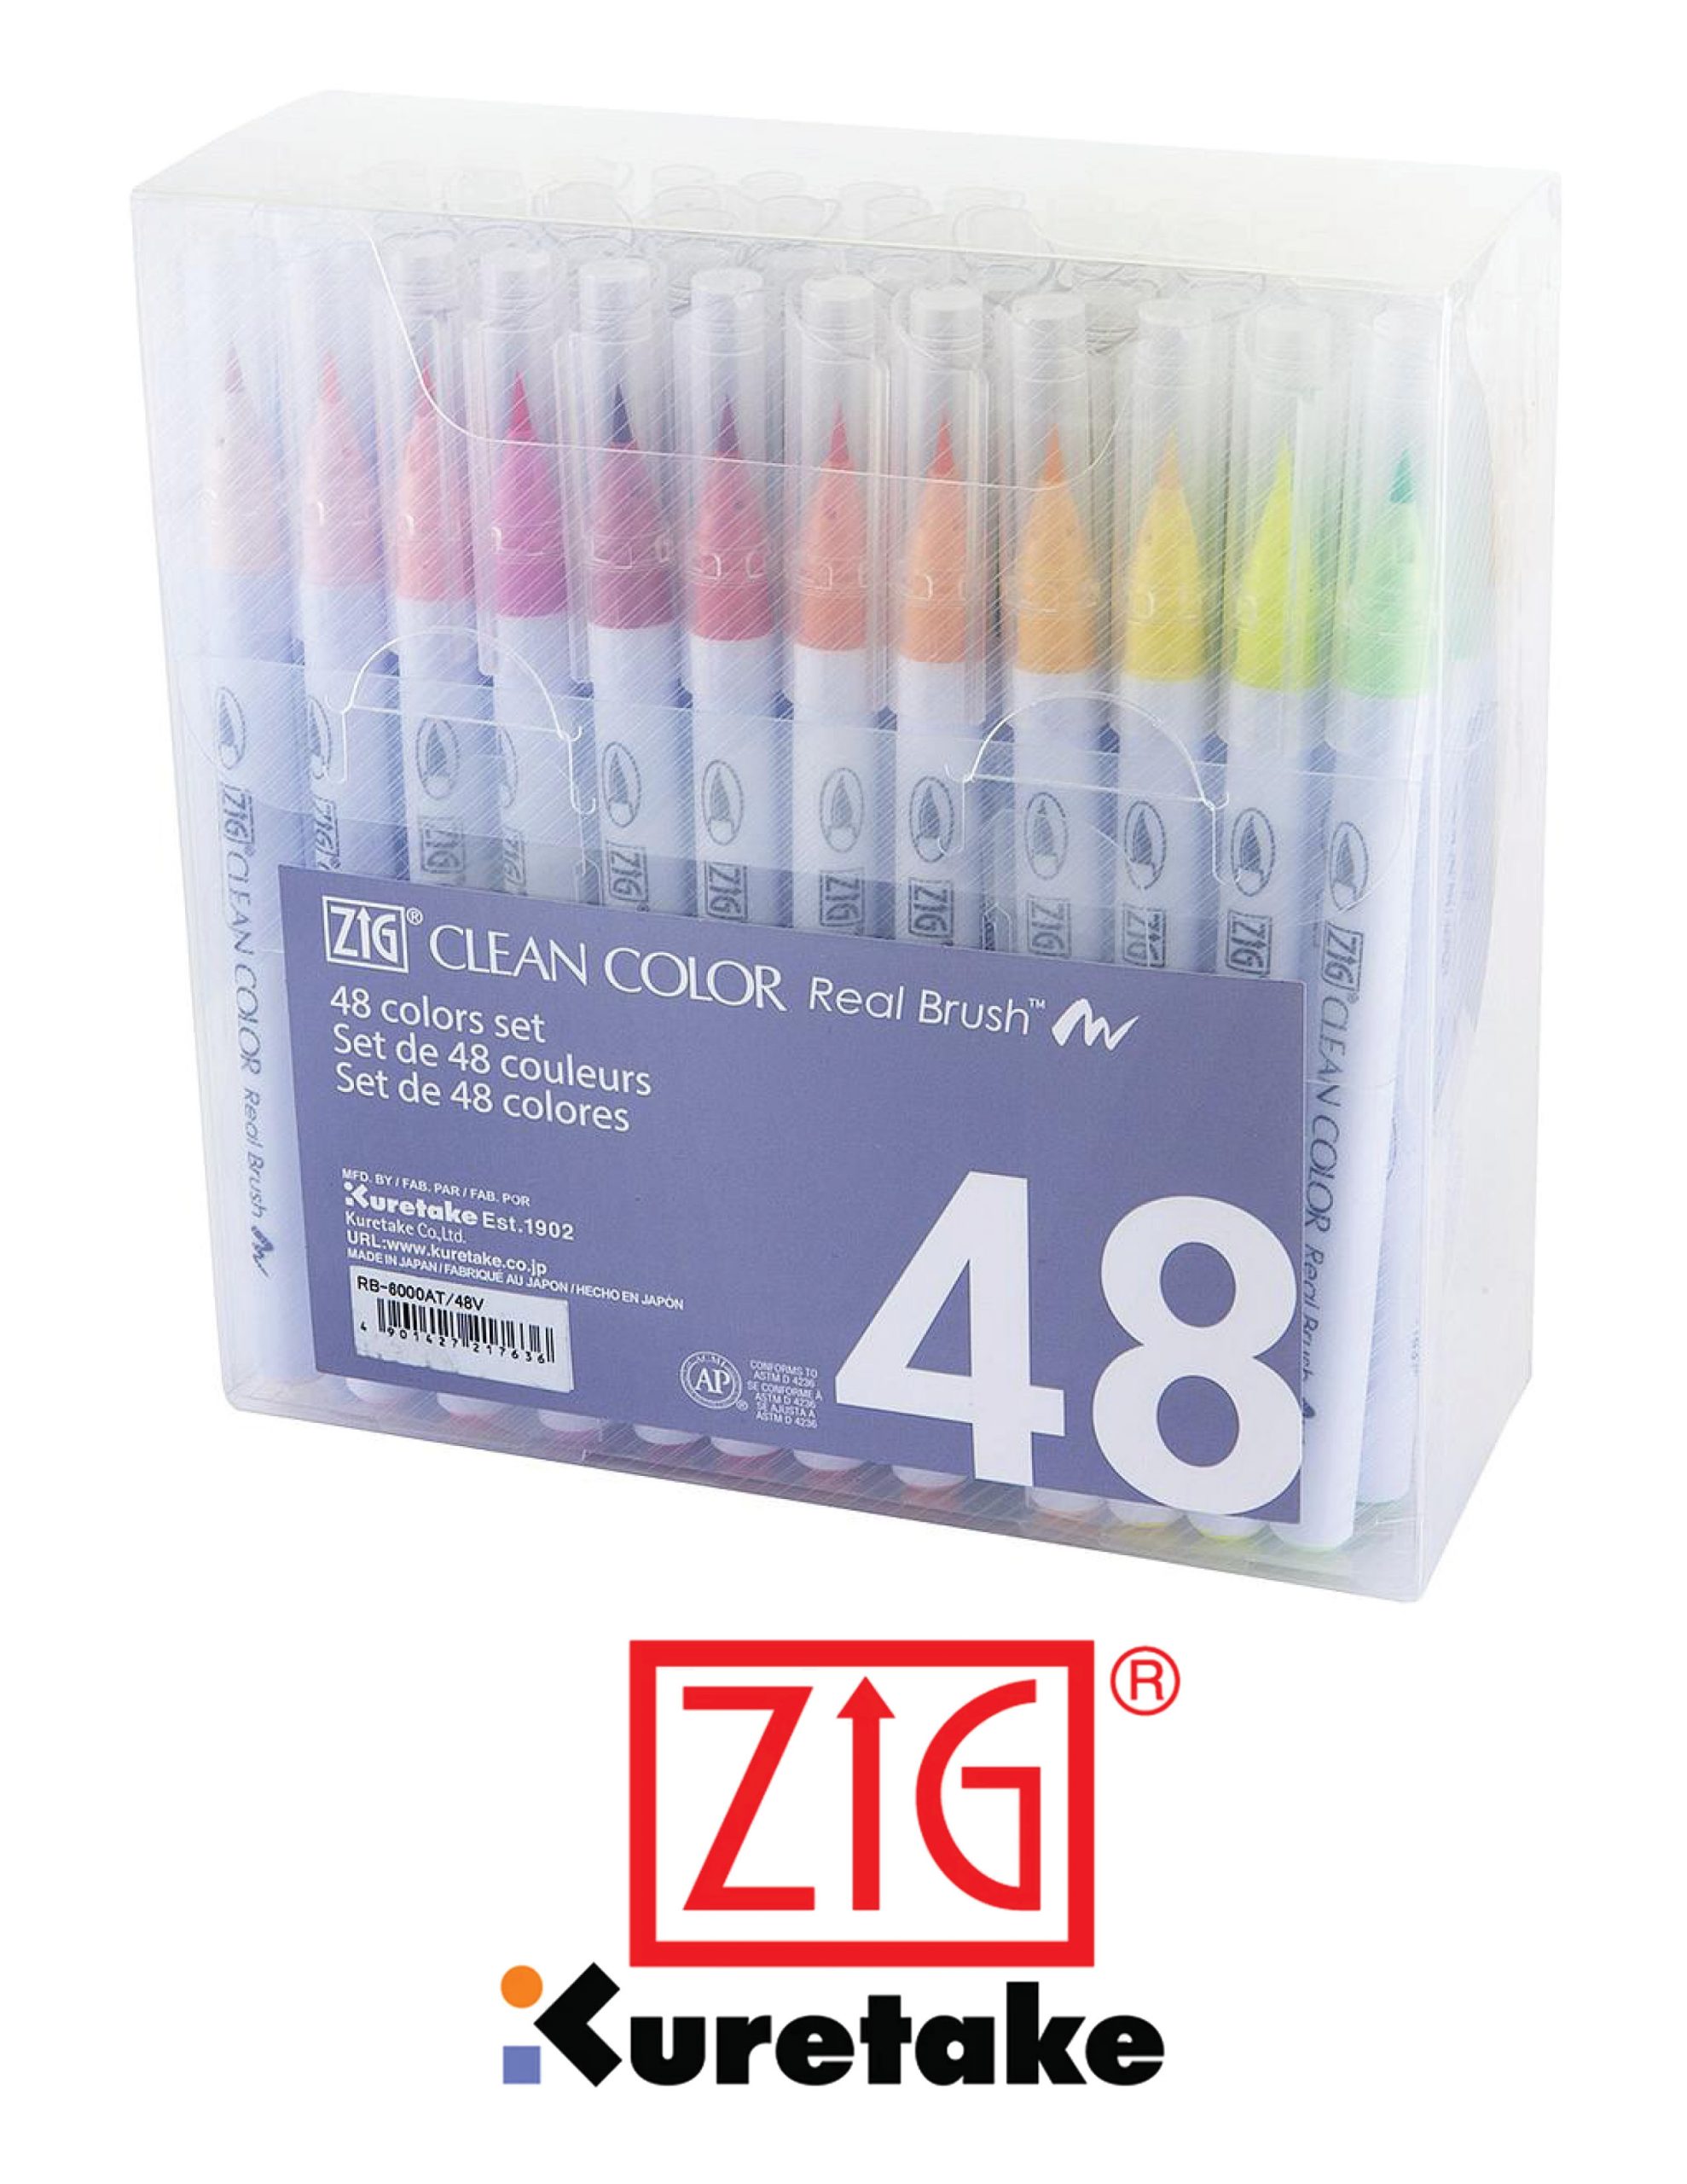 Clean Color Brush Marker set of 48 colors